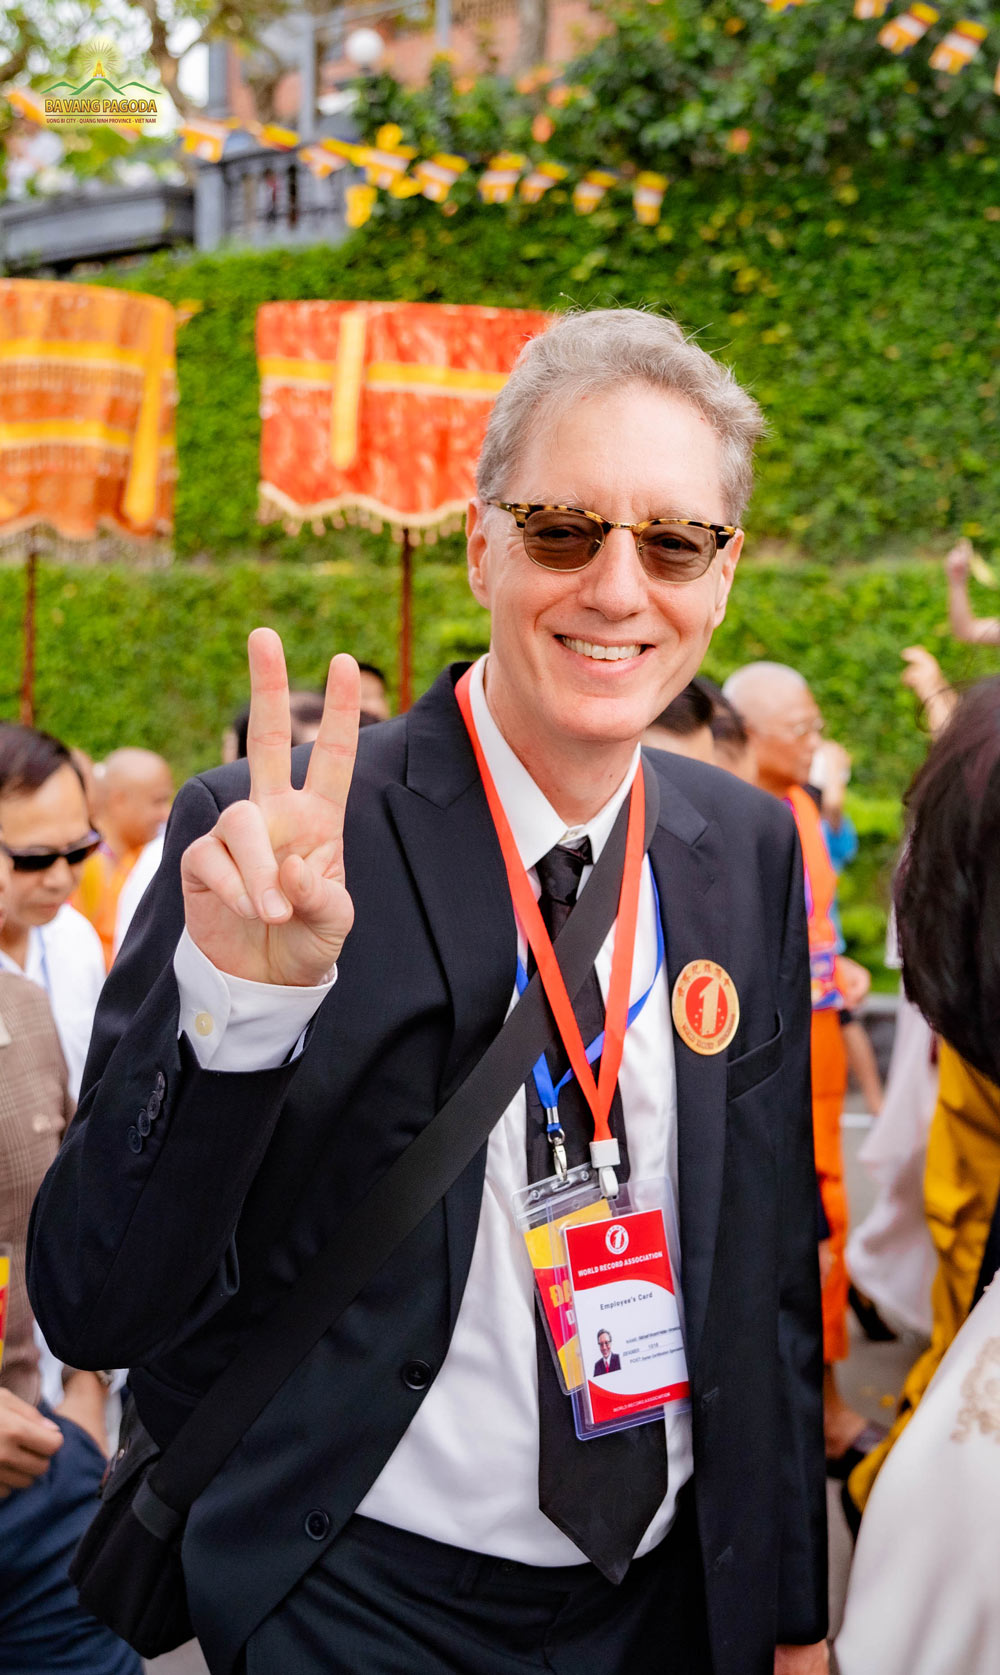 Mr. Michael Vincent - General Director of the World Record Association (WRA), happily captured a joyful moment during the grand Vesak festival at Ba Vang Pagoda